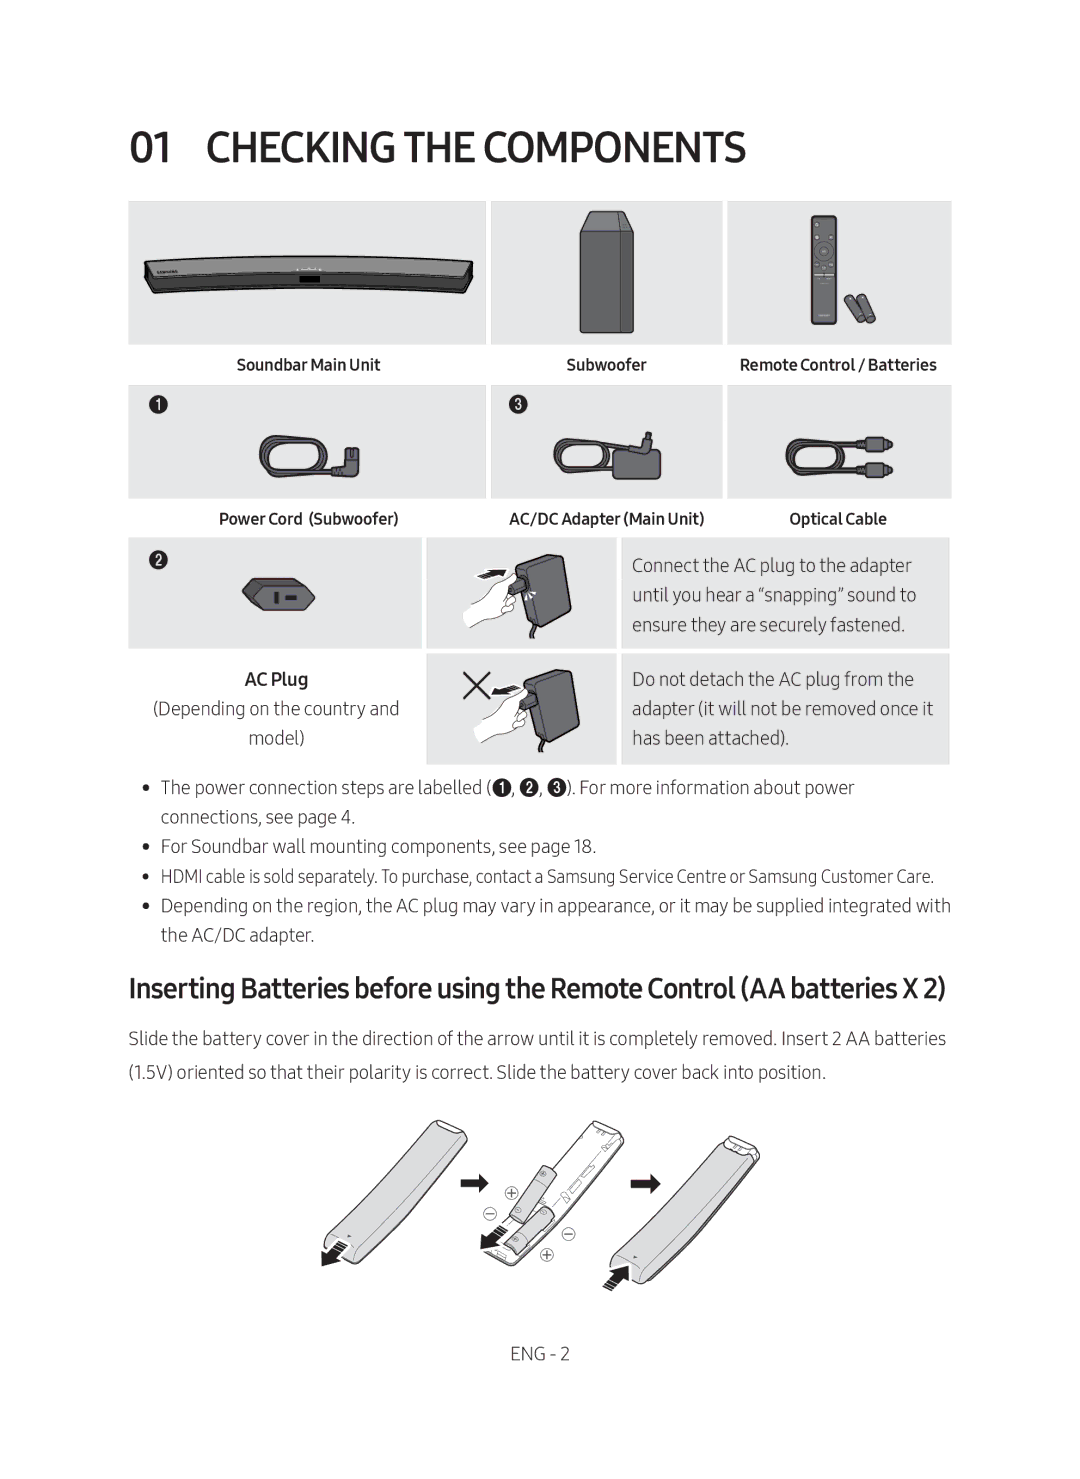 Samsung HW-M4500/EN manual Checking the Components, Soundbar Main Unit Power Cord Subwoofer, AC/DC Adapter Main Unit 